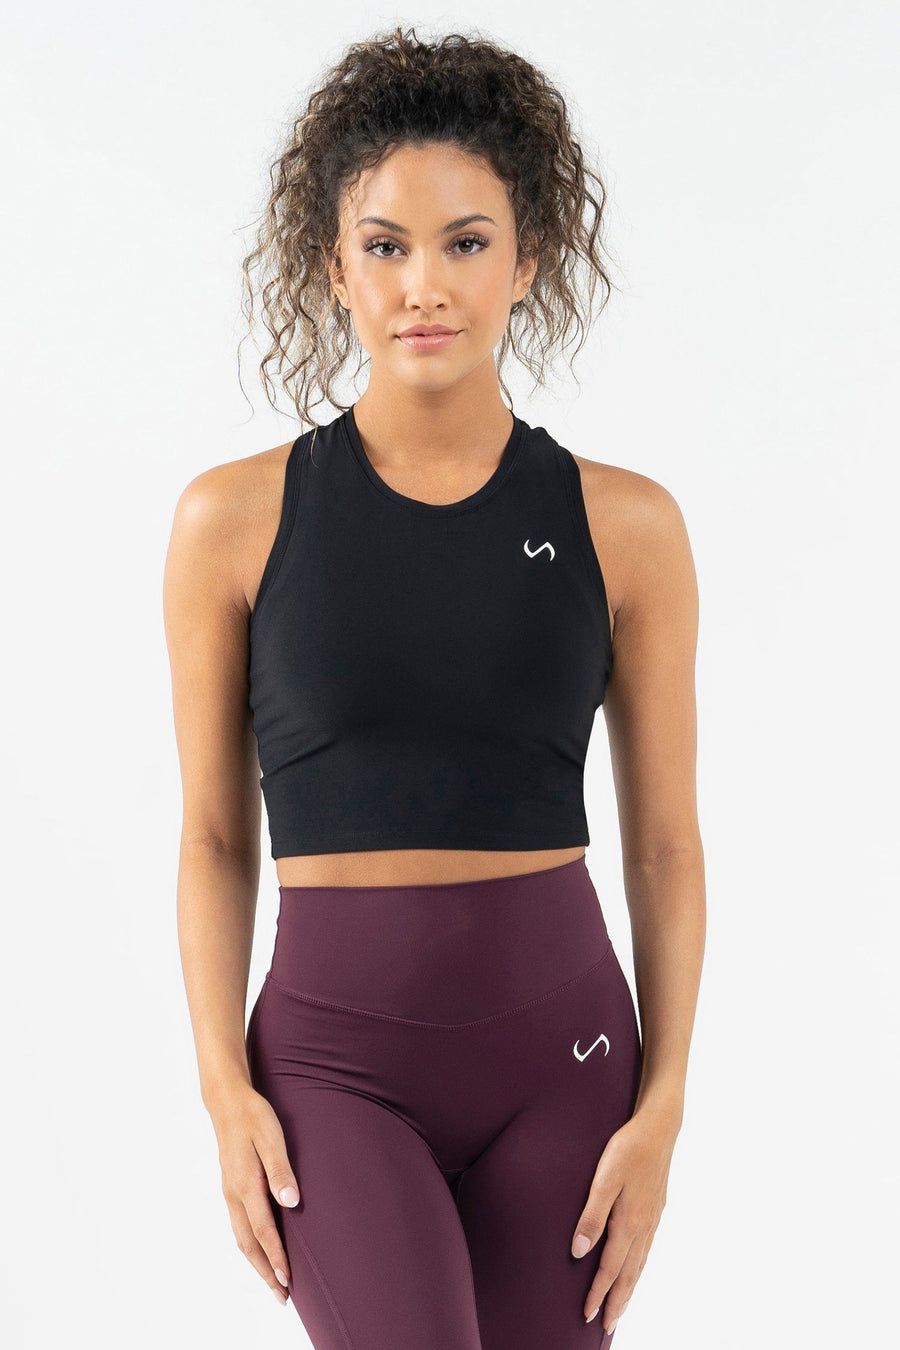 Women's Crop Tops, Workout Cropped Shirts